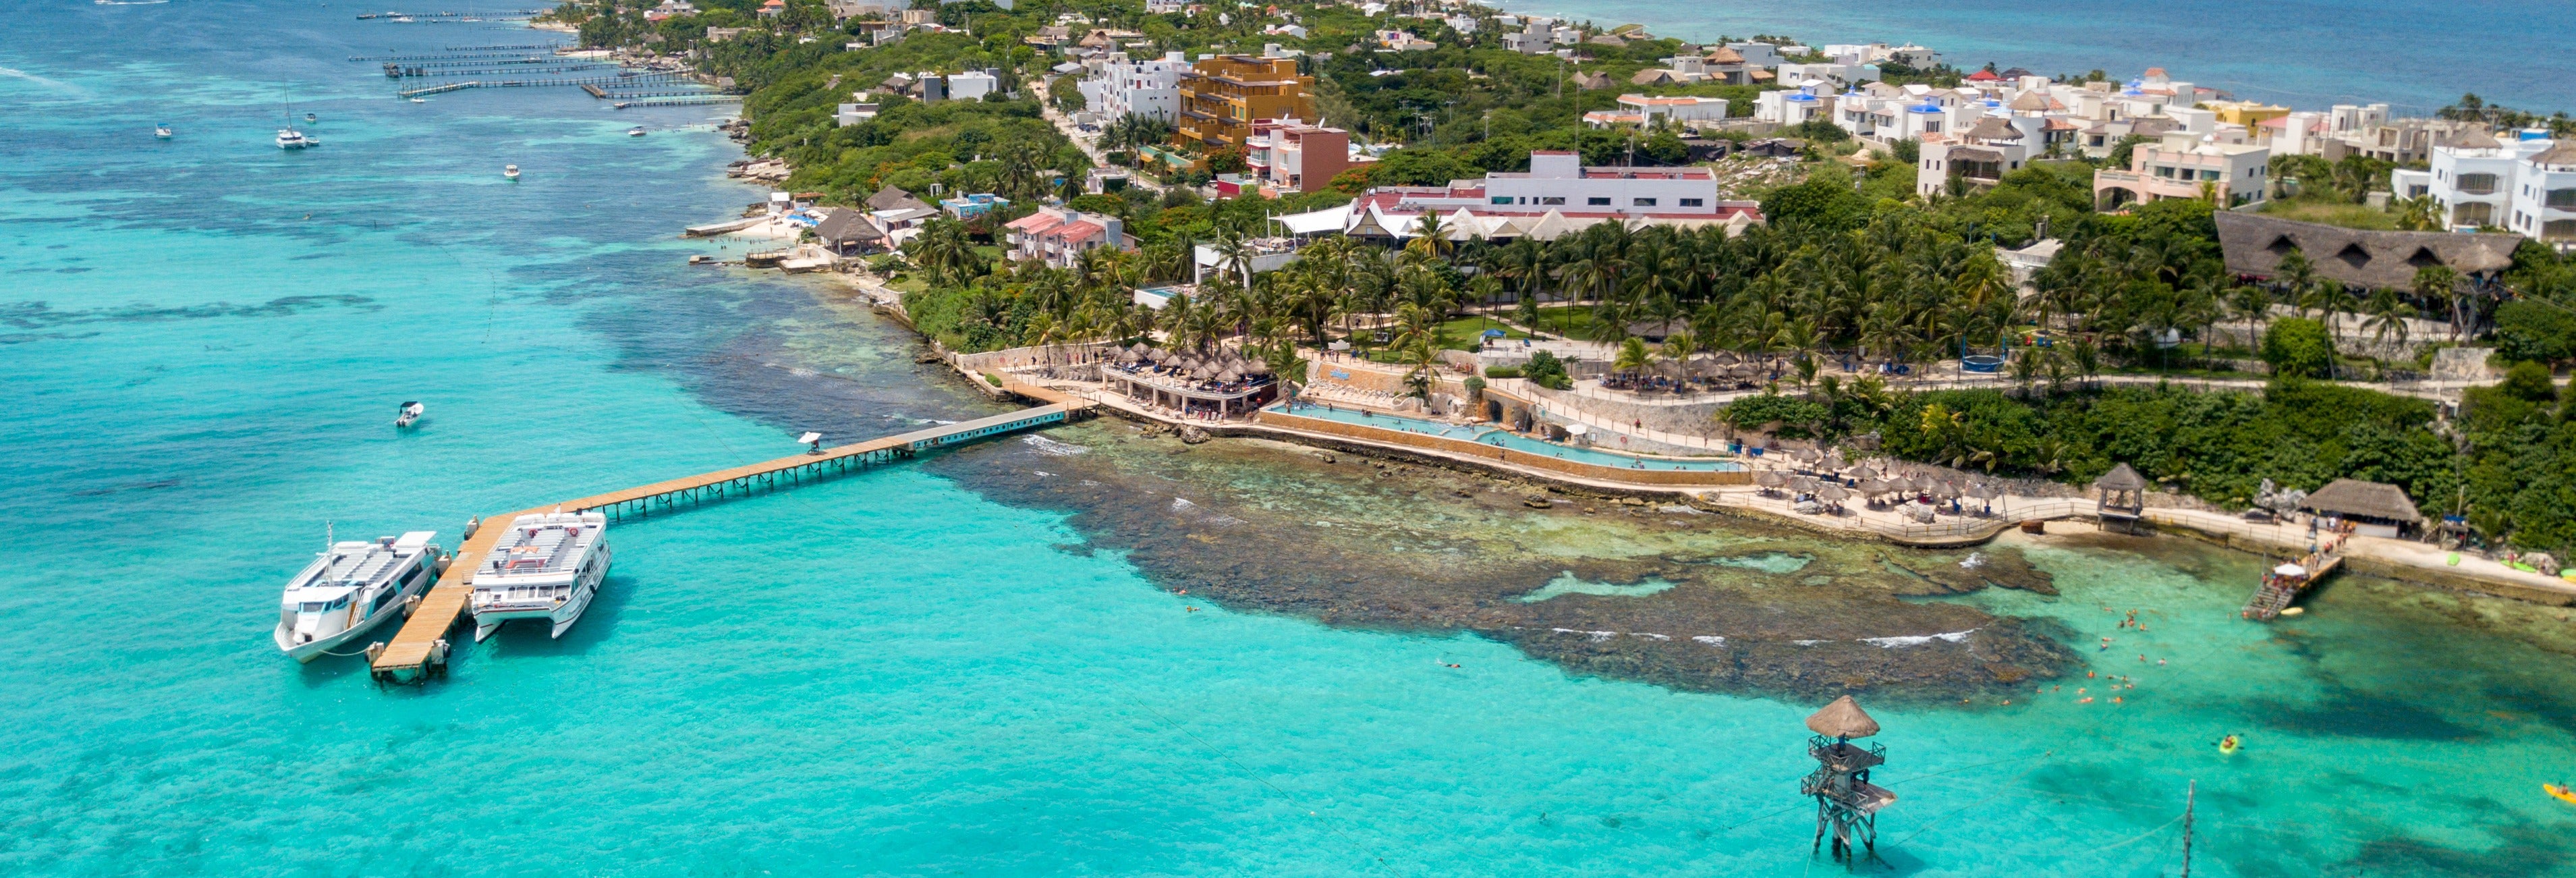 Excursión a Isla Mujeres en catamarán desde Cancún